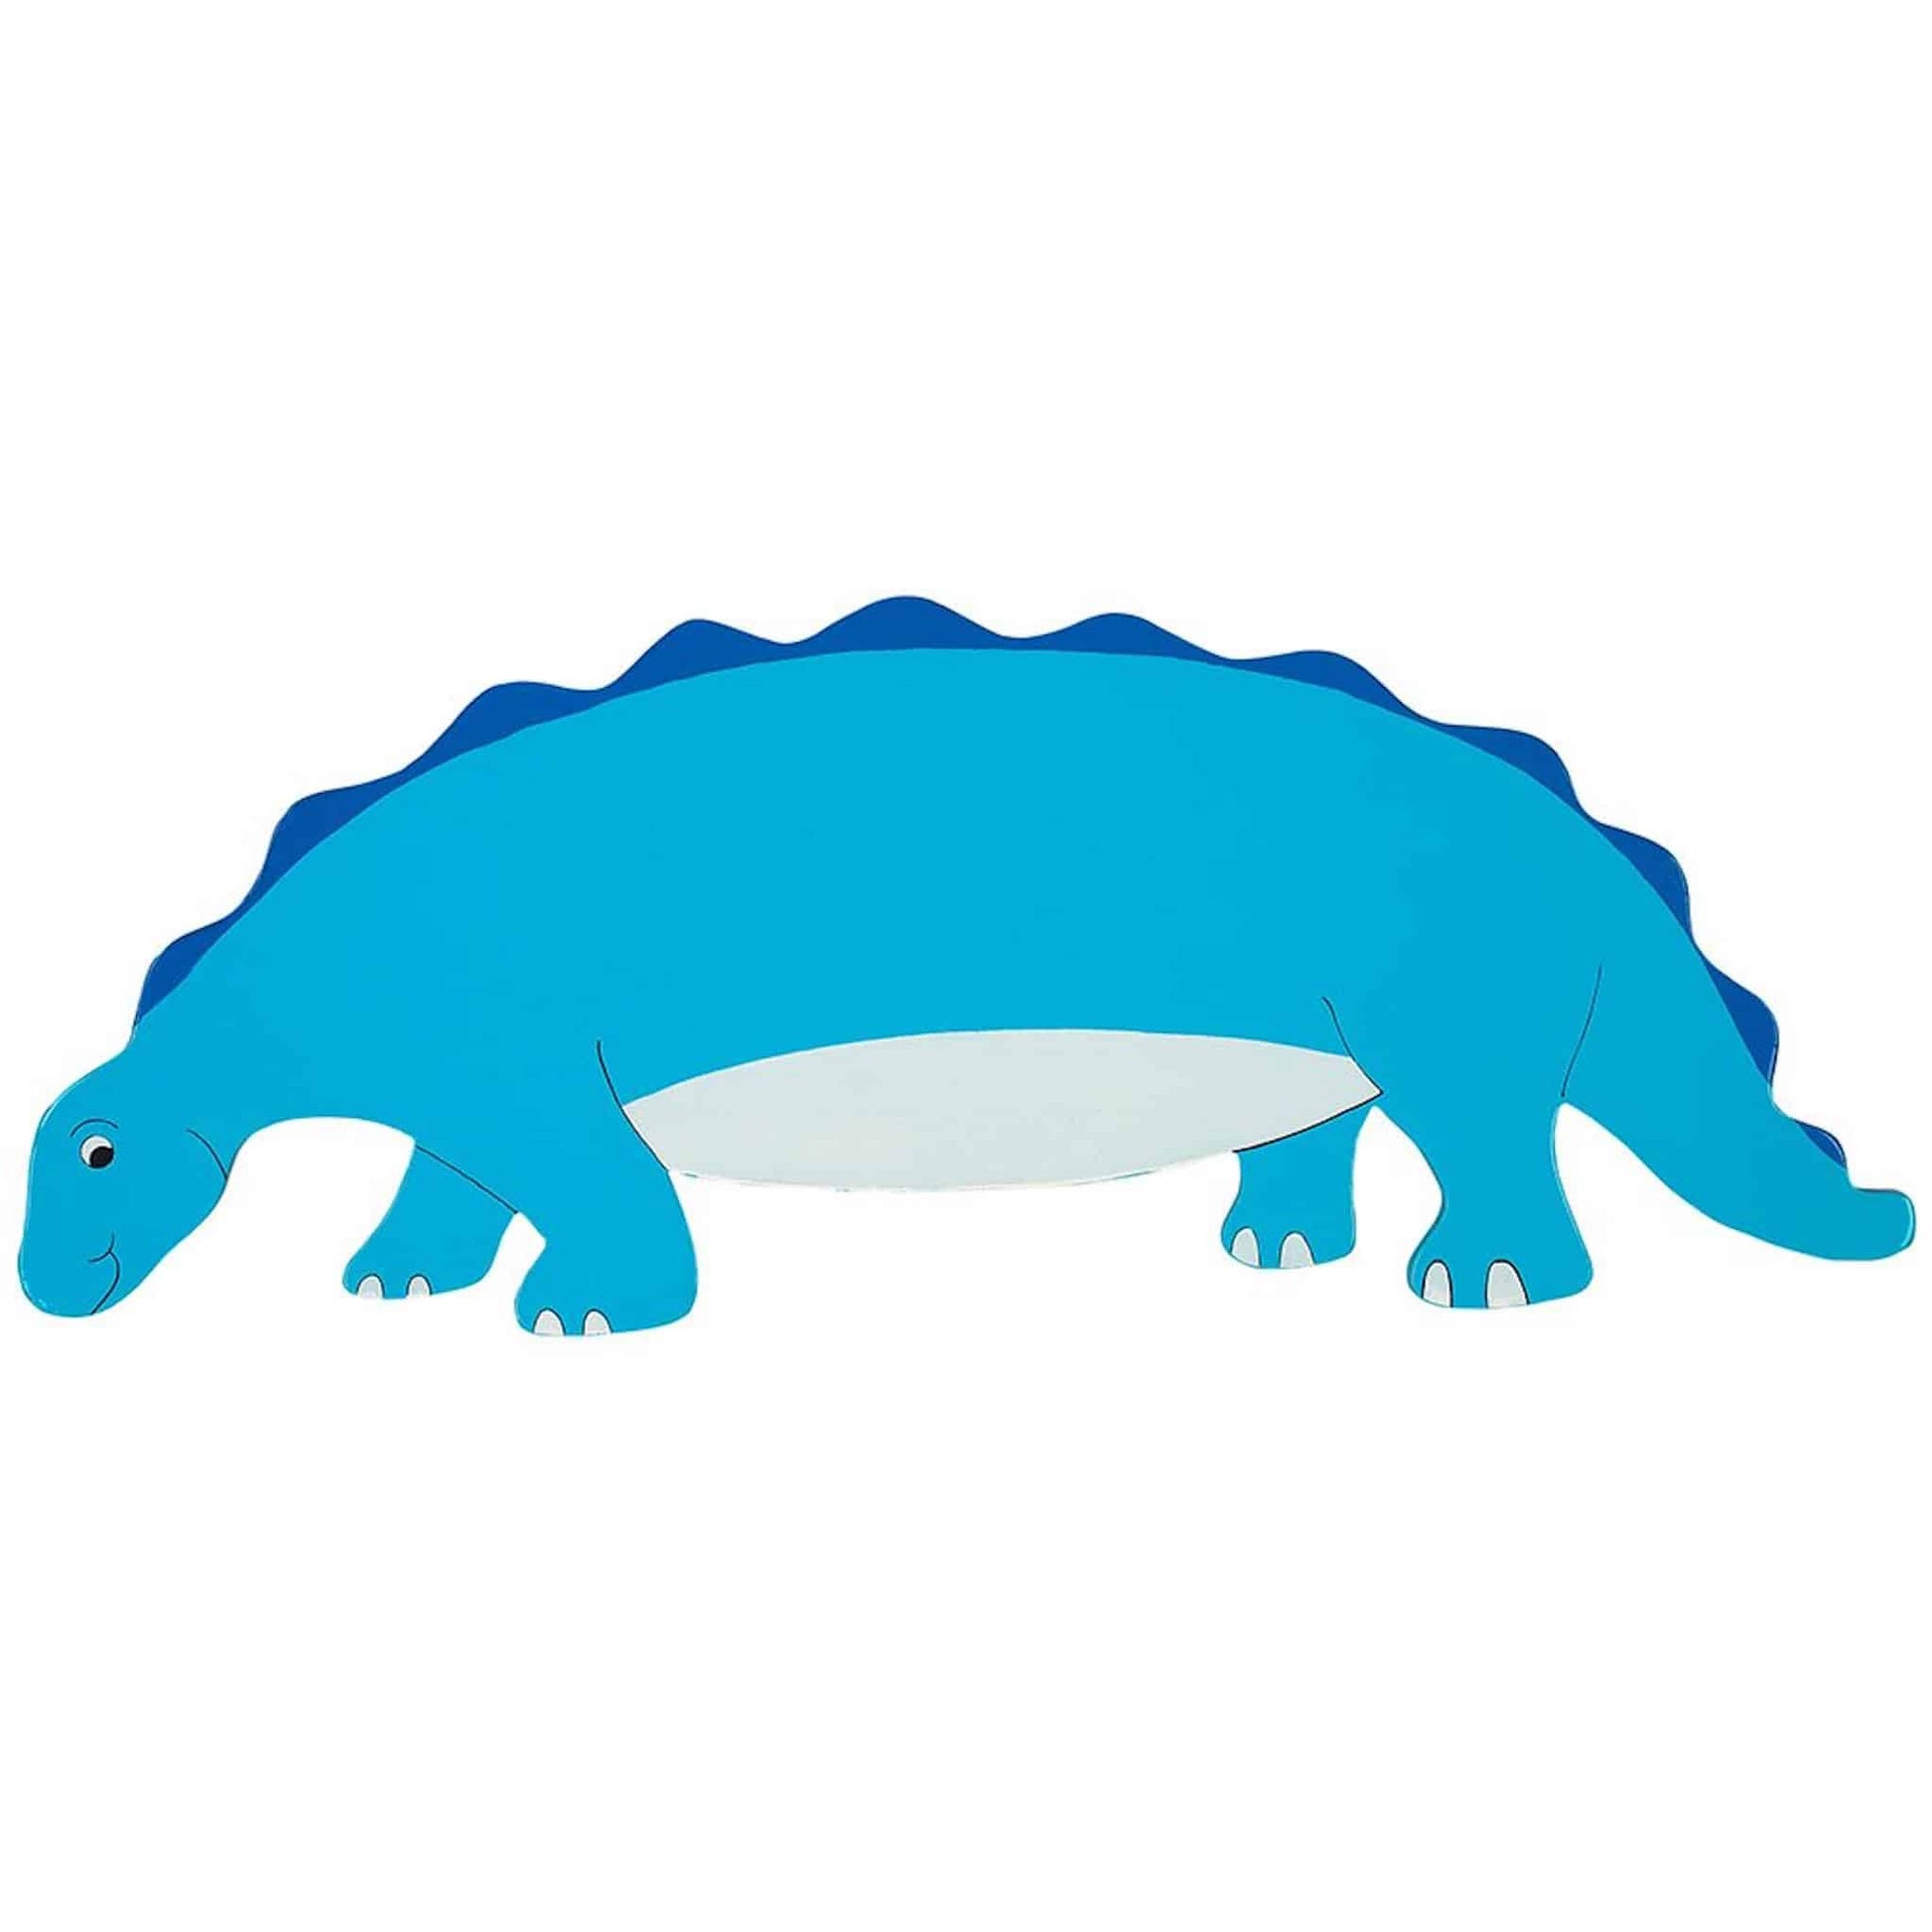 Lanka Kade Name Plaque Blue Dinosaur Empty